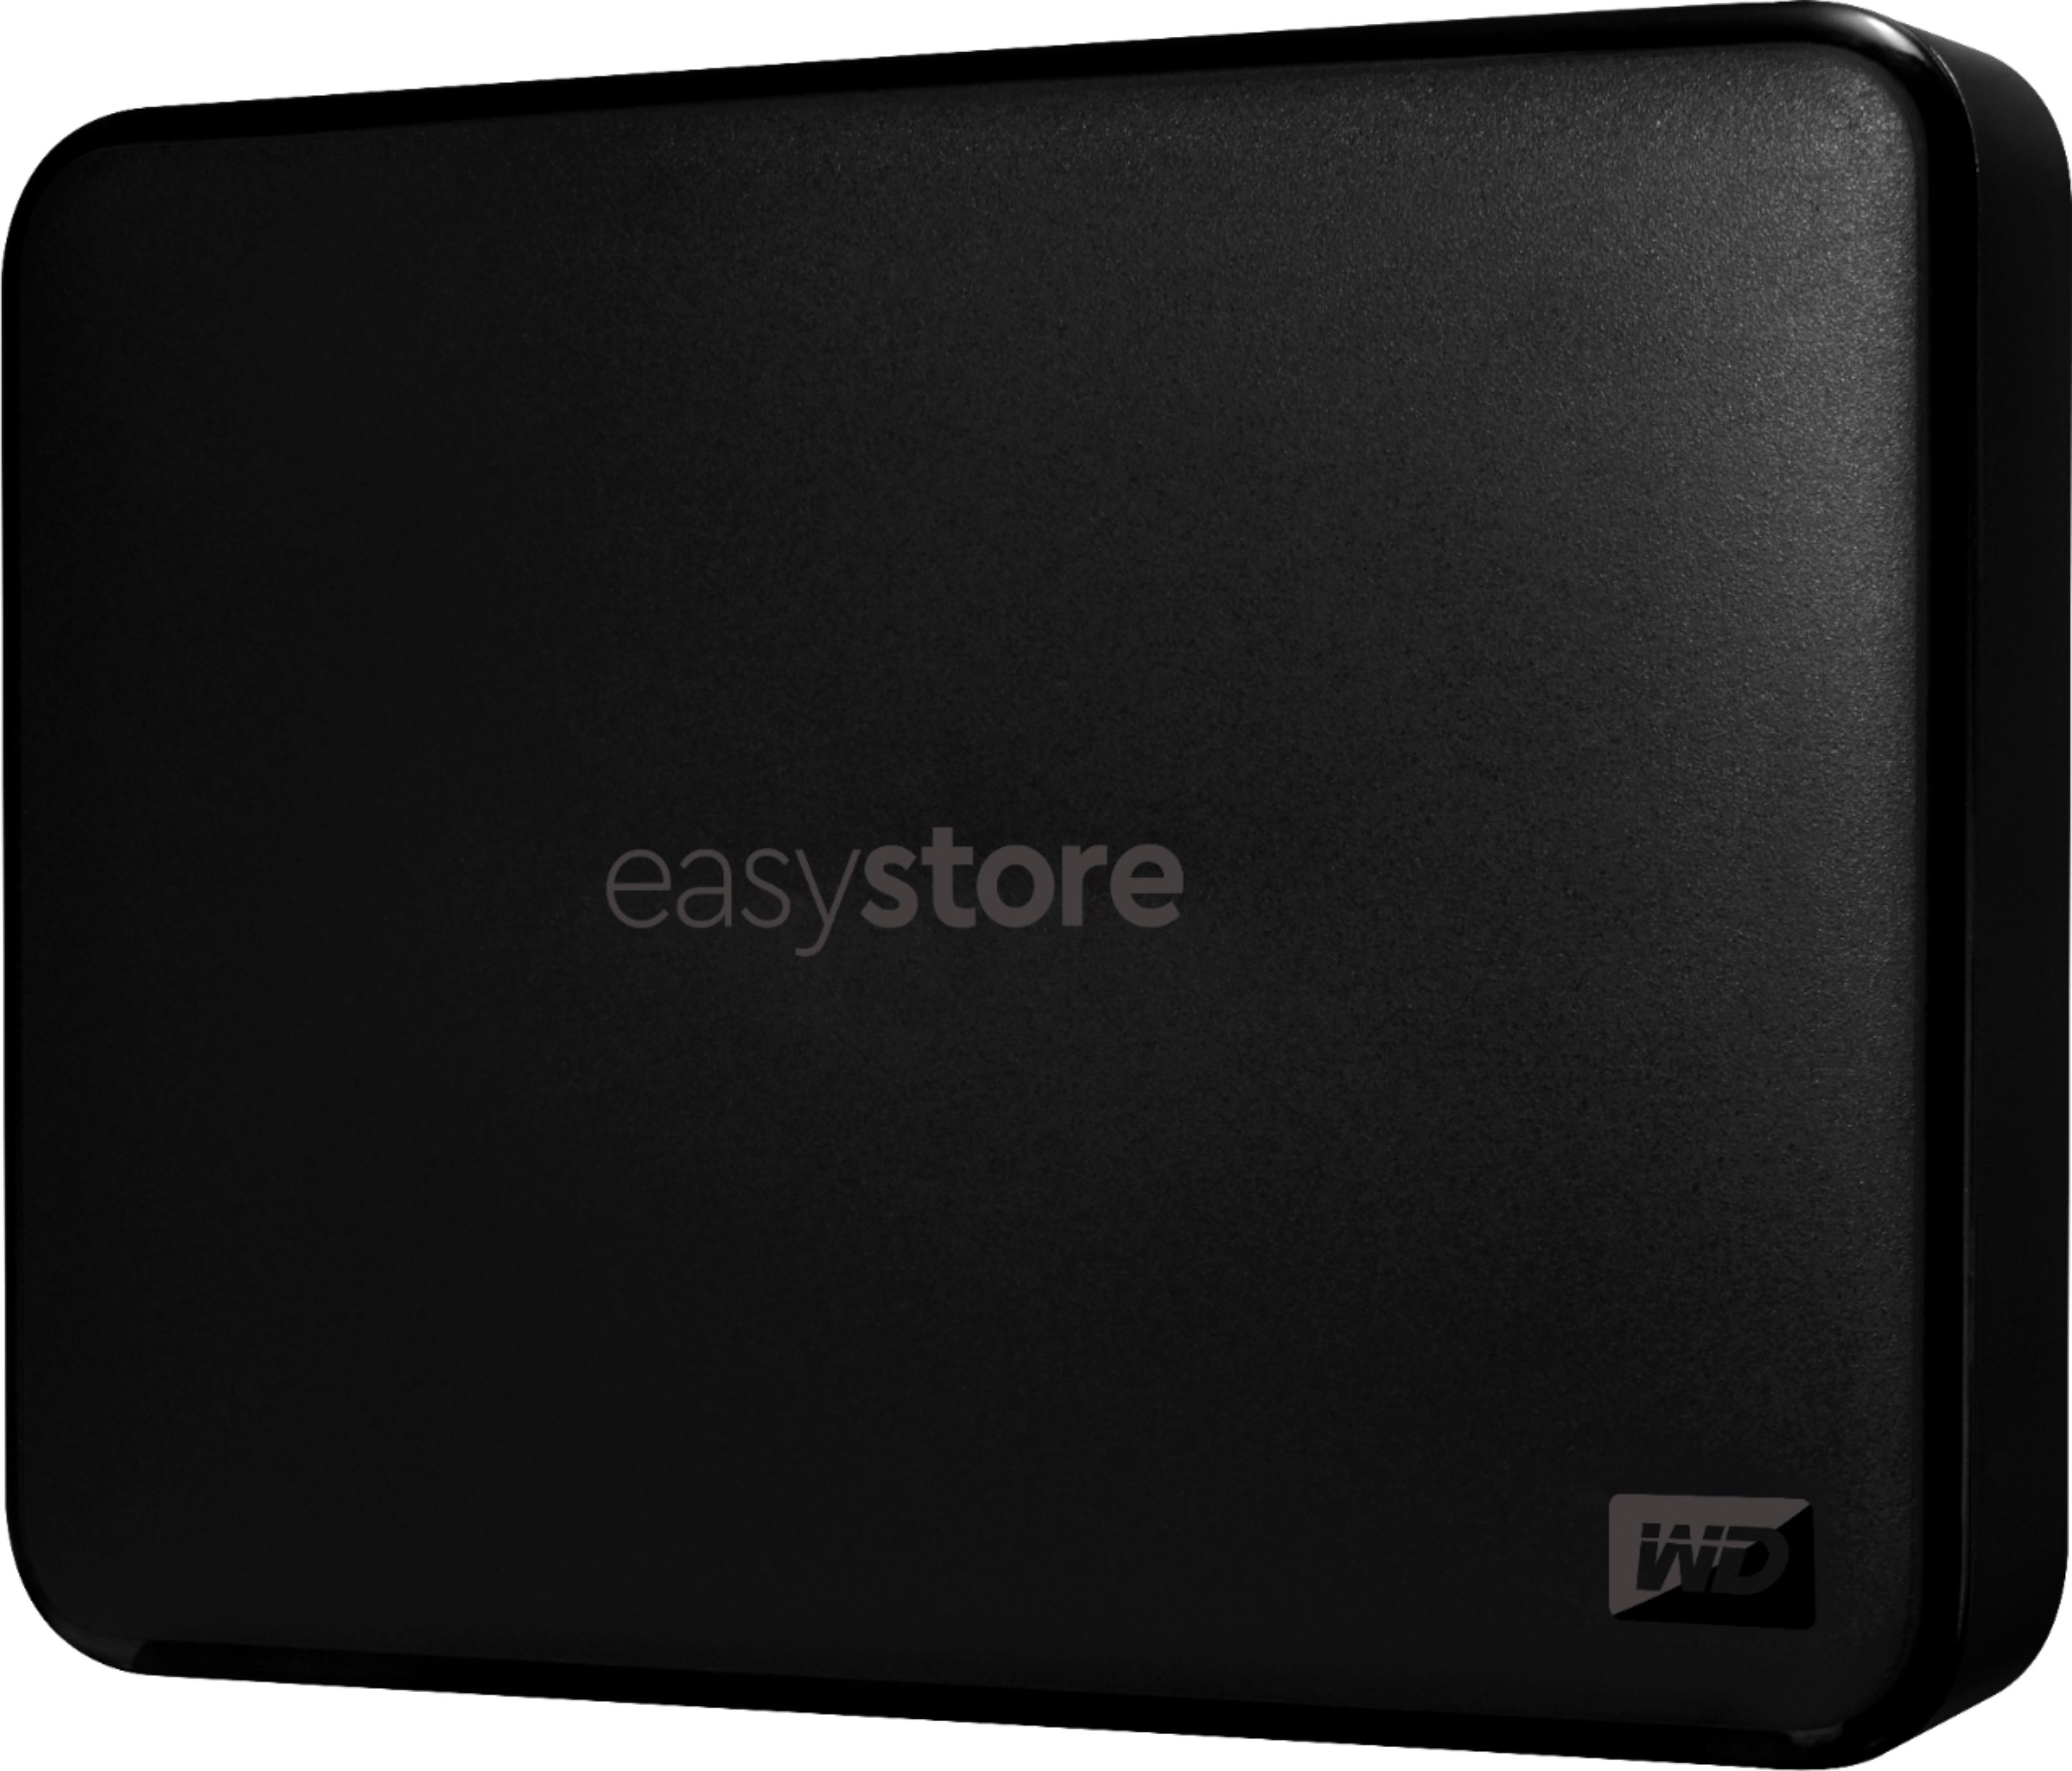 5TB WD Easystore External USB 3.0 Portable Hard Drive $95